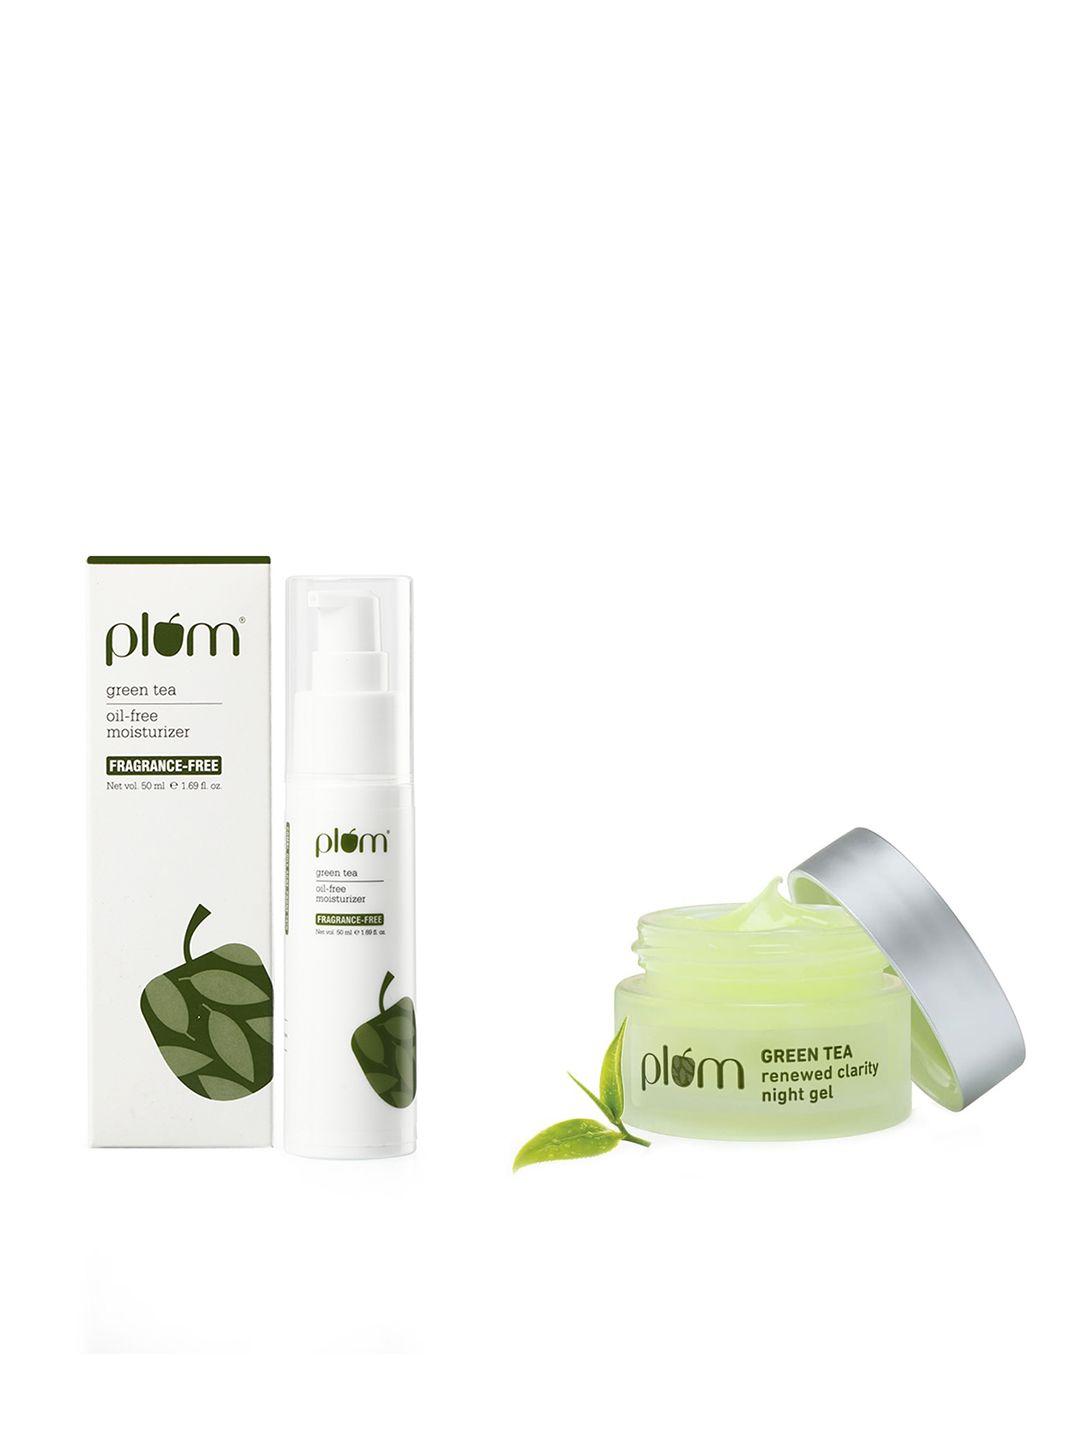 plum-set-of-green-tea-moisturizer---50-ml-&-green-tea-renewed-clarity-night-gel---15-ml